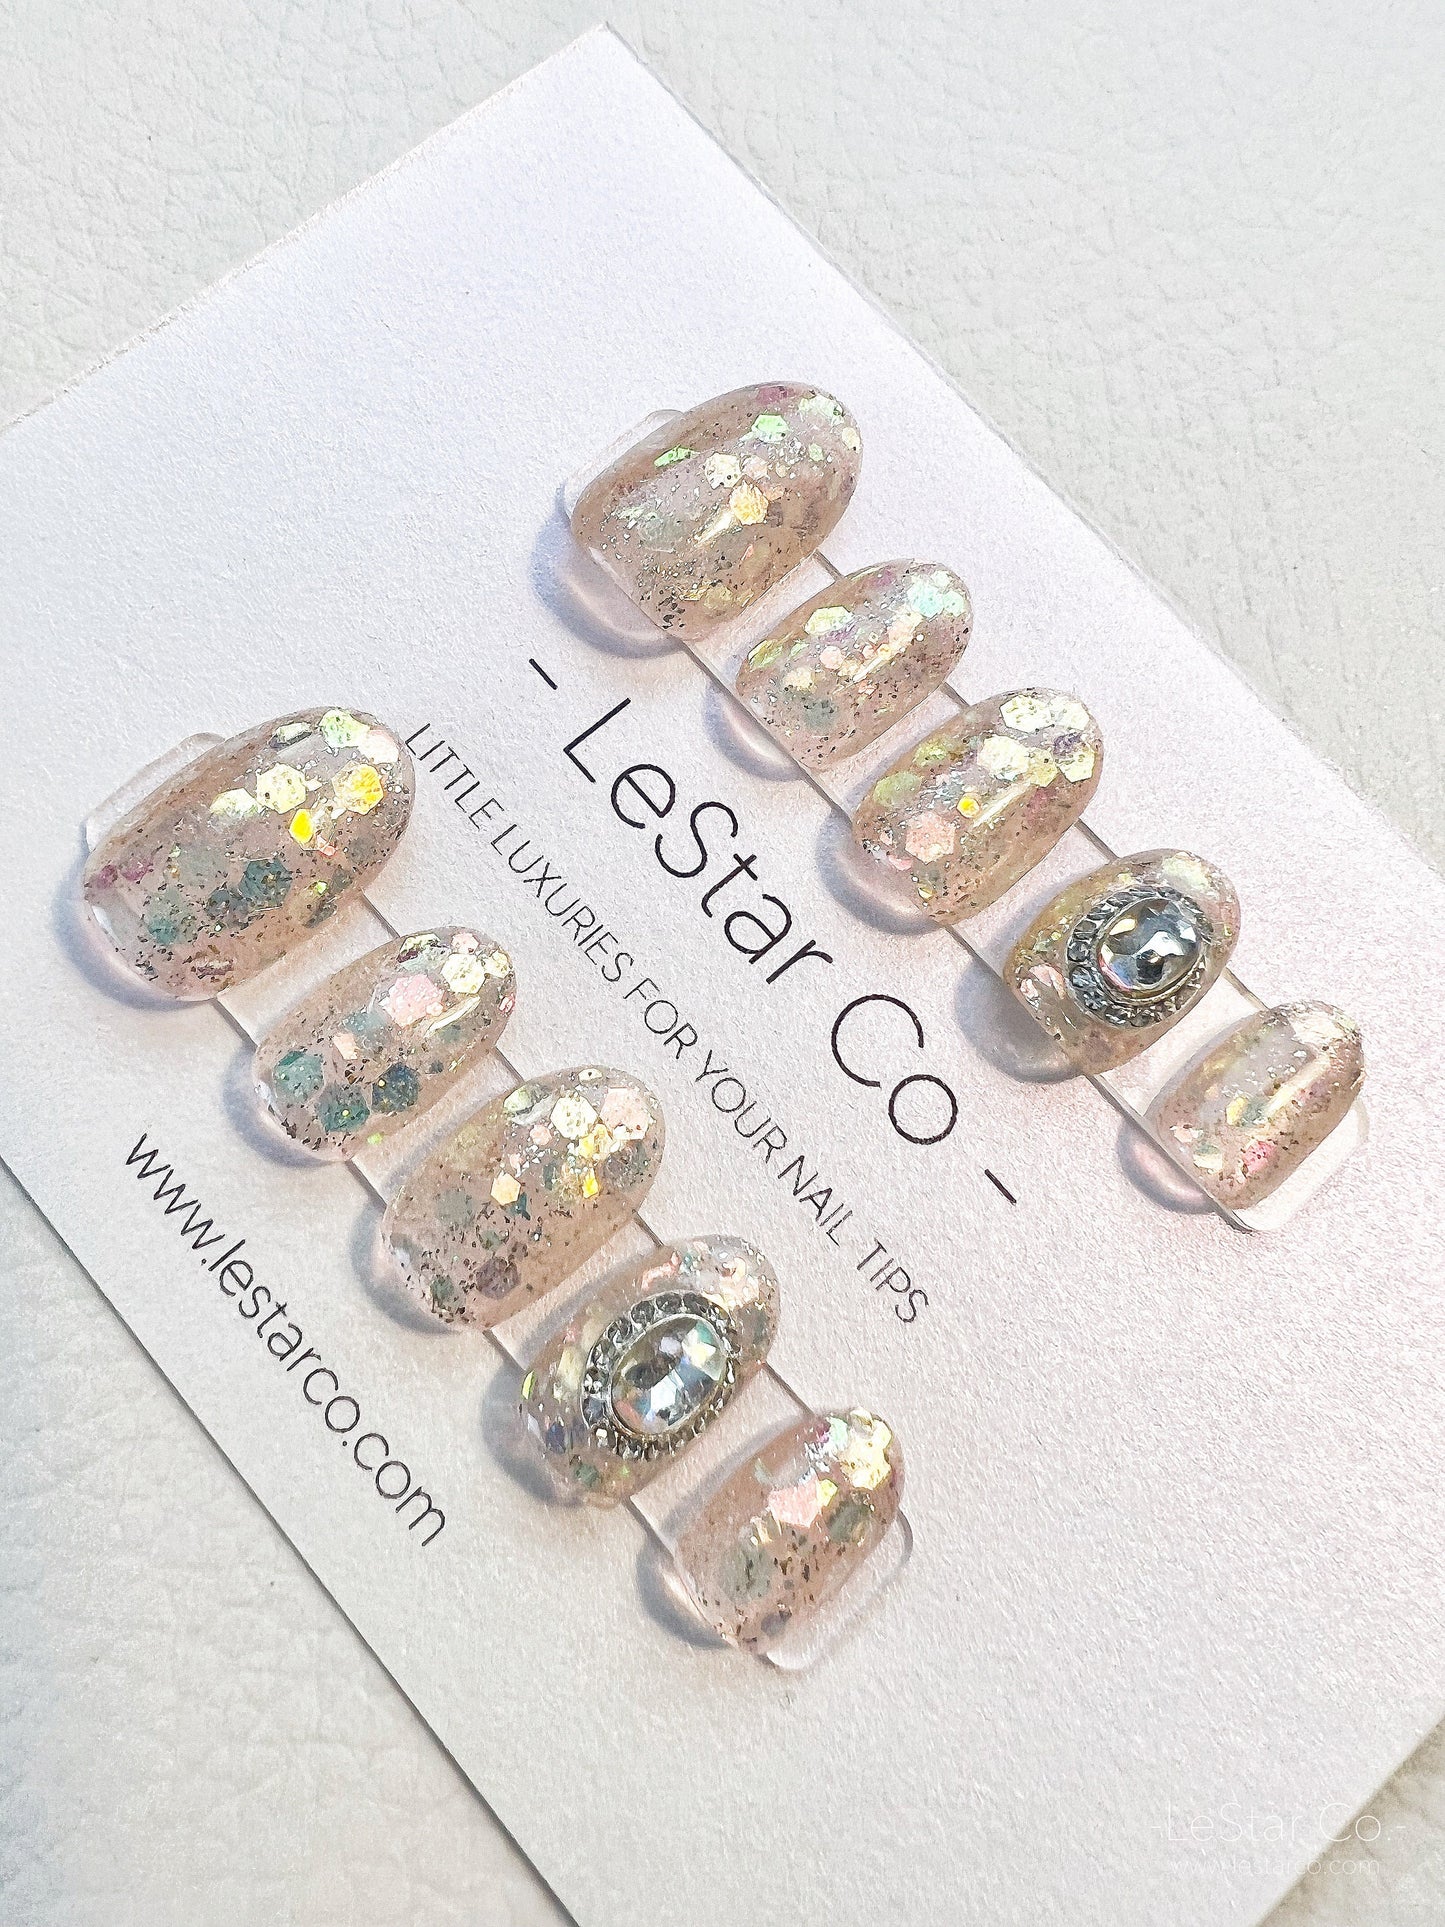 Reusable Glitter w/ Oval Gem Premium Press on Nails Gel Manicure | Fake Nails | Handmade | Lestarco faux nails XWZ099